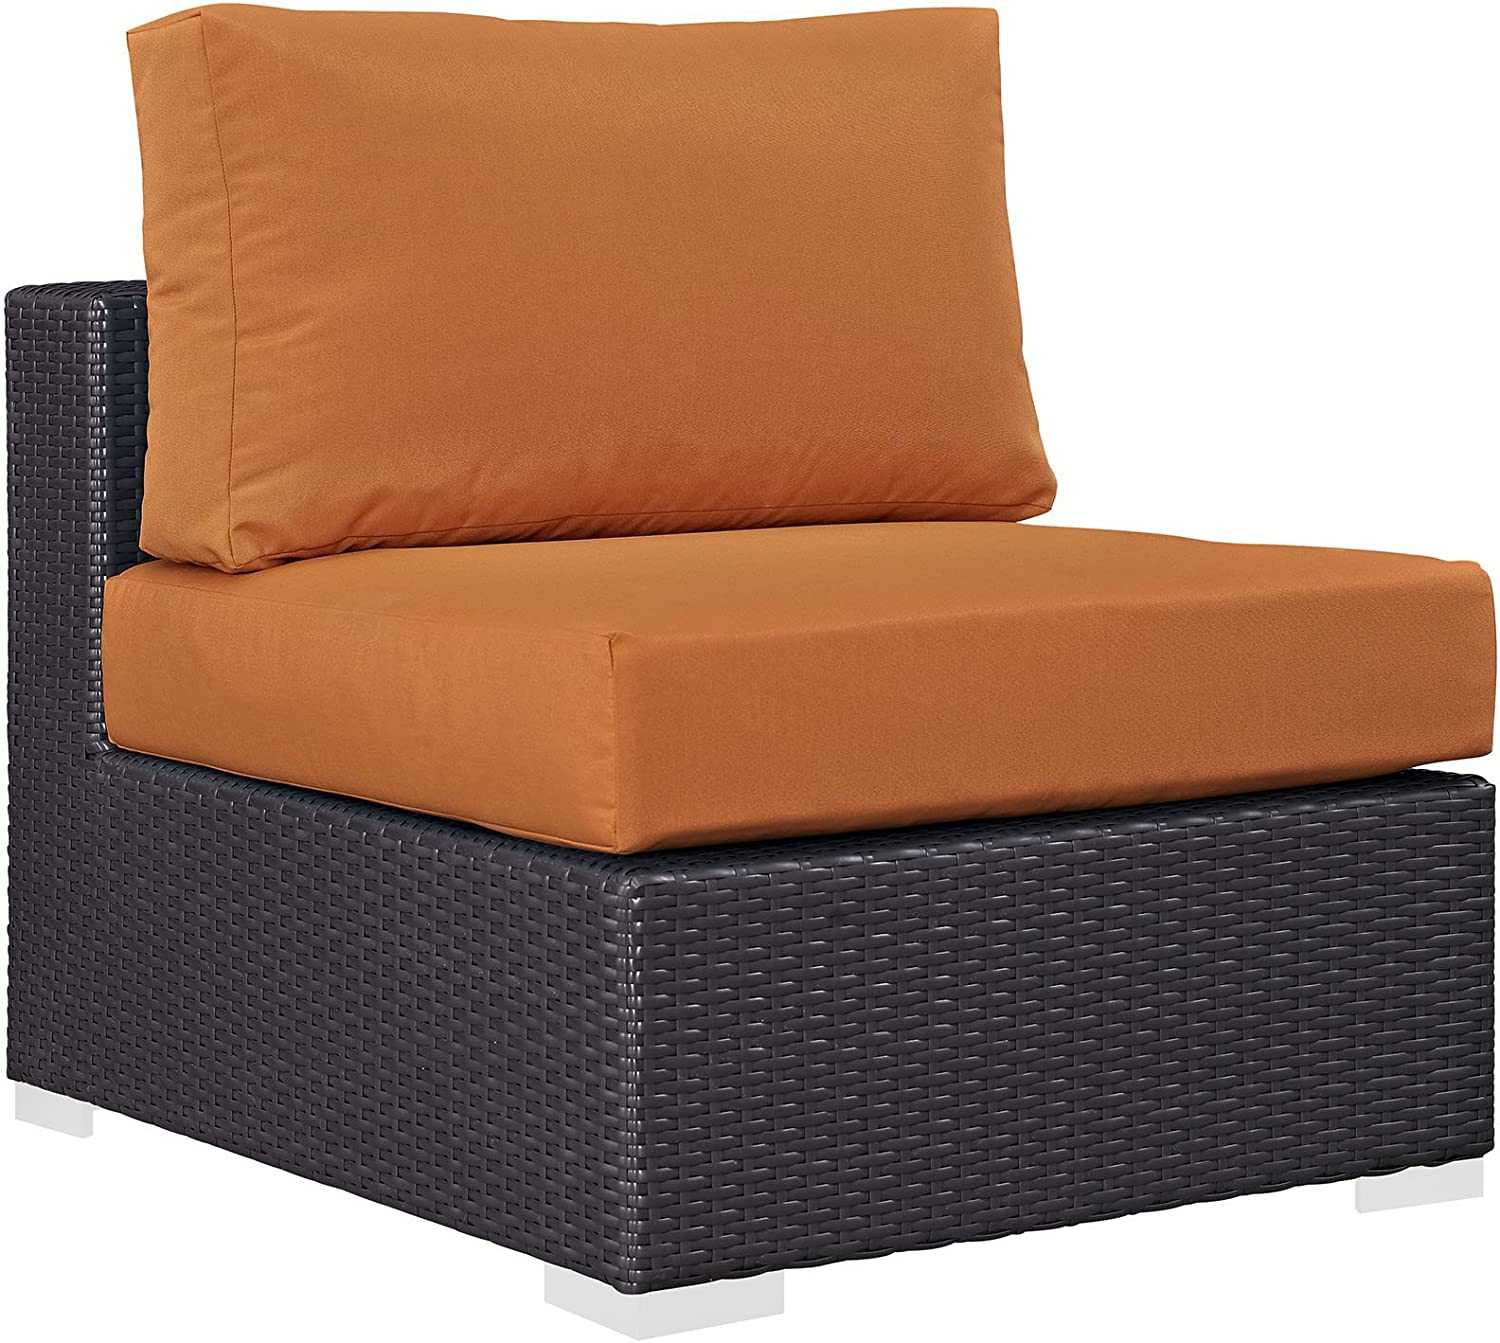 Modway Convene Wicker Rattan Outdoor Patio Sectional Sofa Armless Chair in Espresso Orange